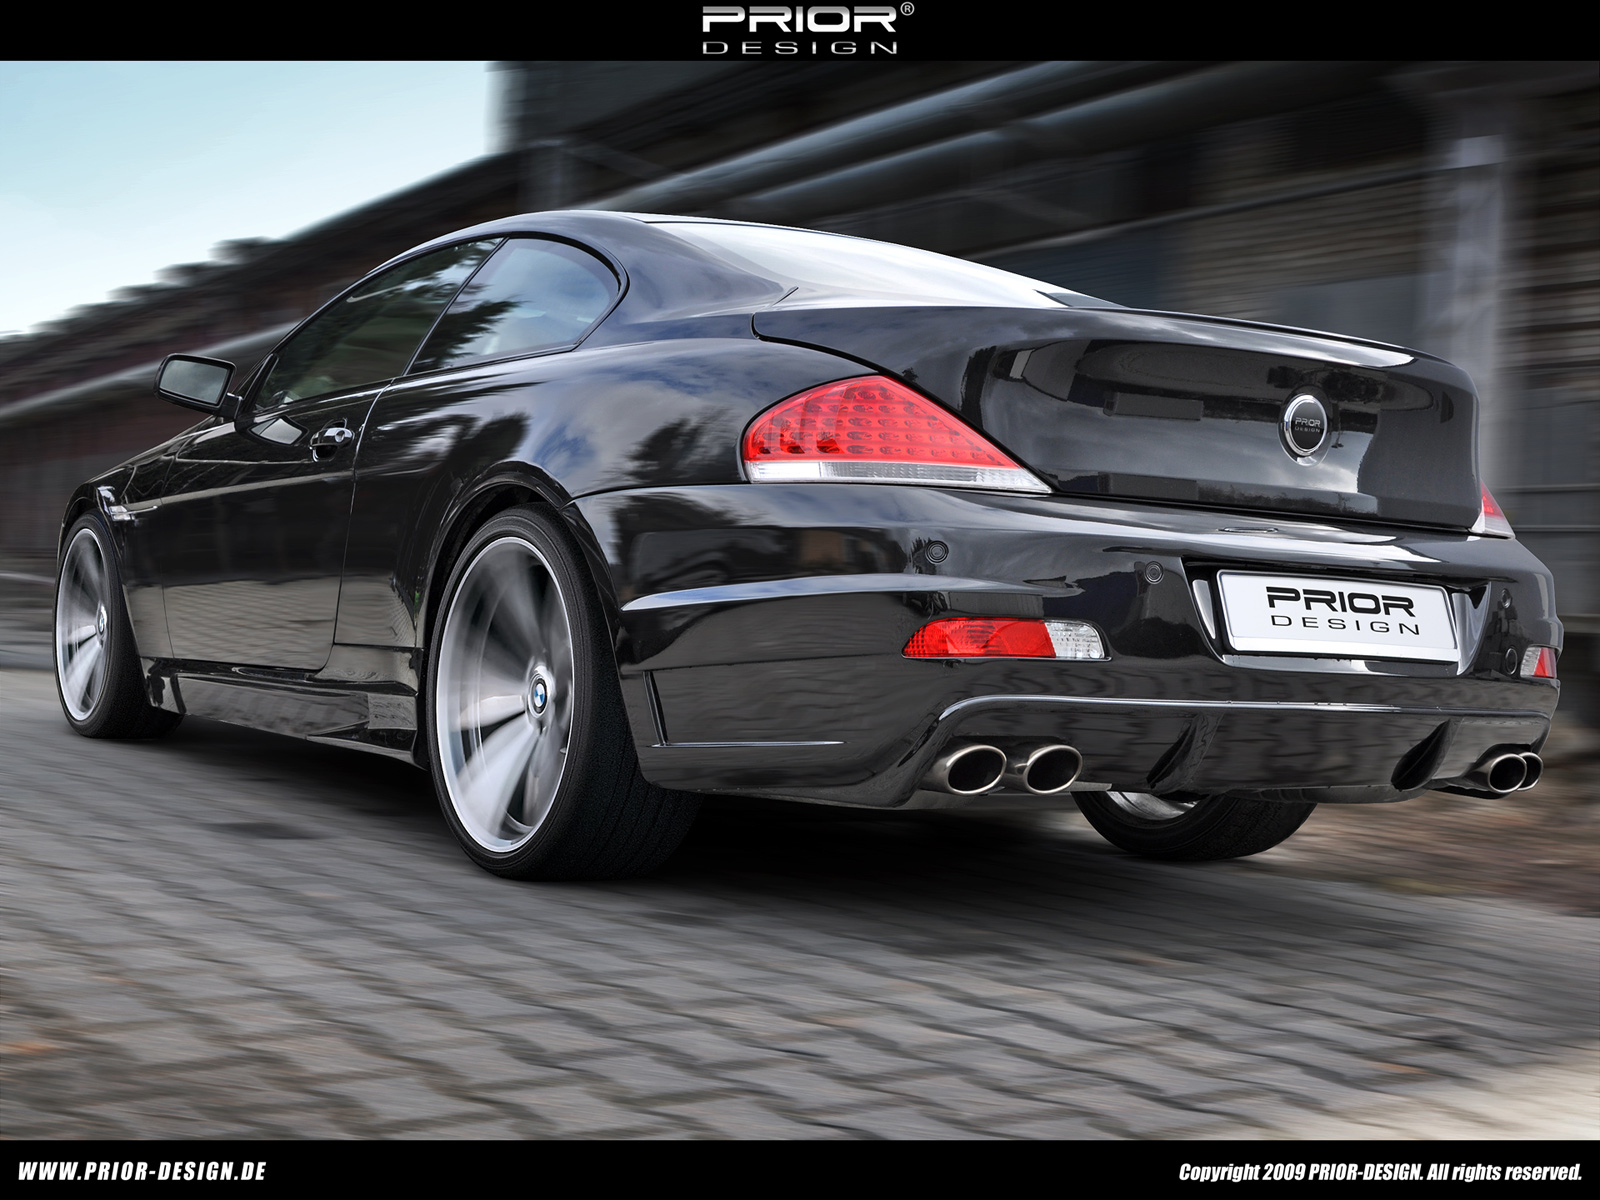 2009 Prior Design BMW 6er - Rear Angle - 1600x1200 - Wallpaper